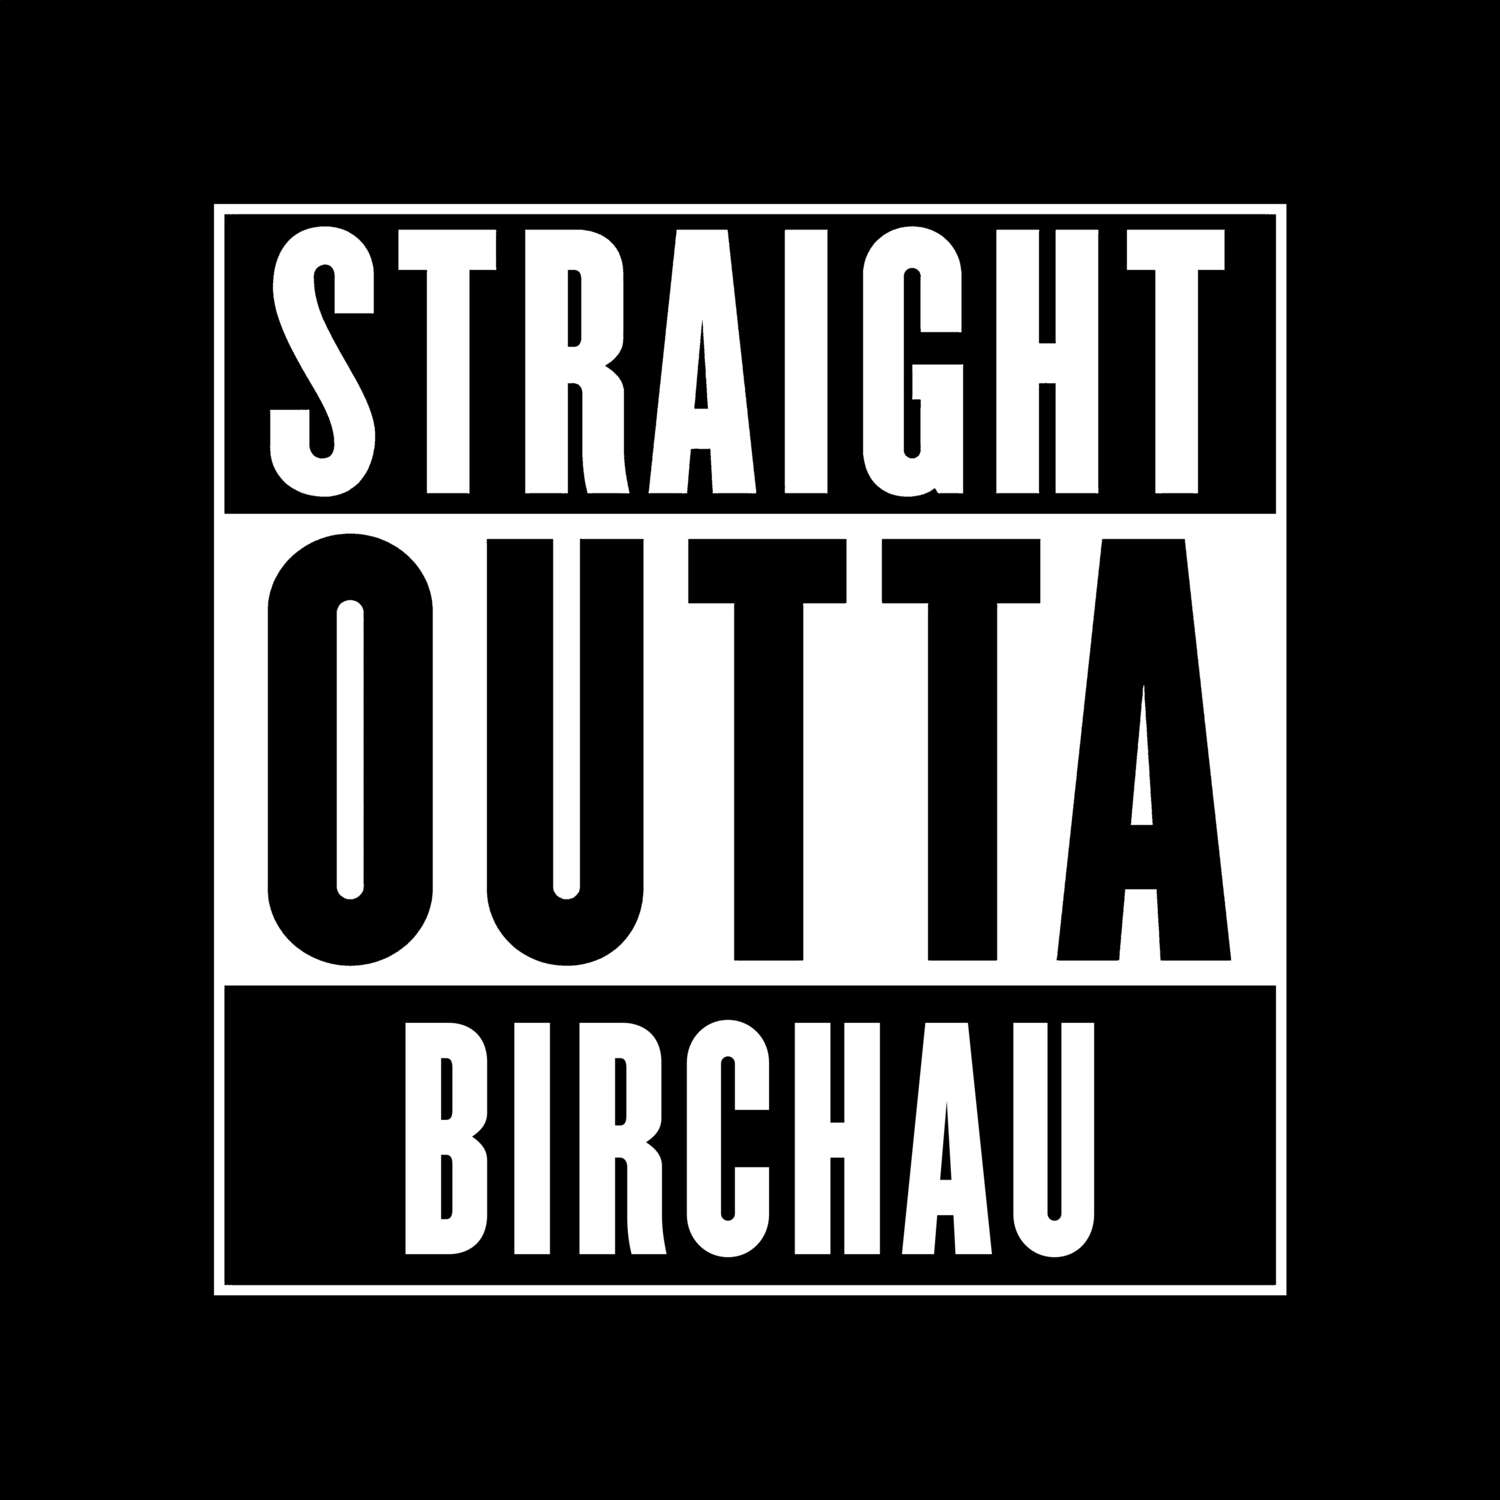 Birchau T-Shirt »Straight Outta«